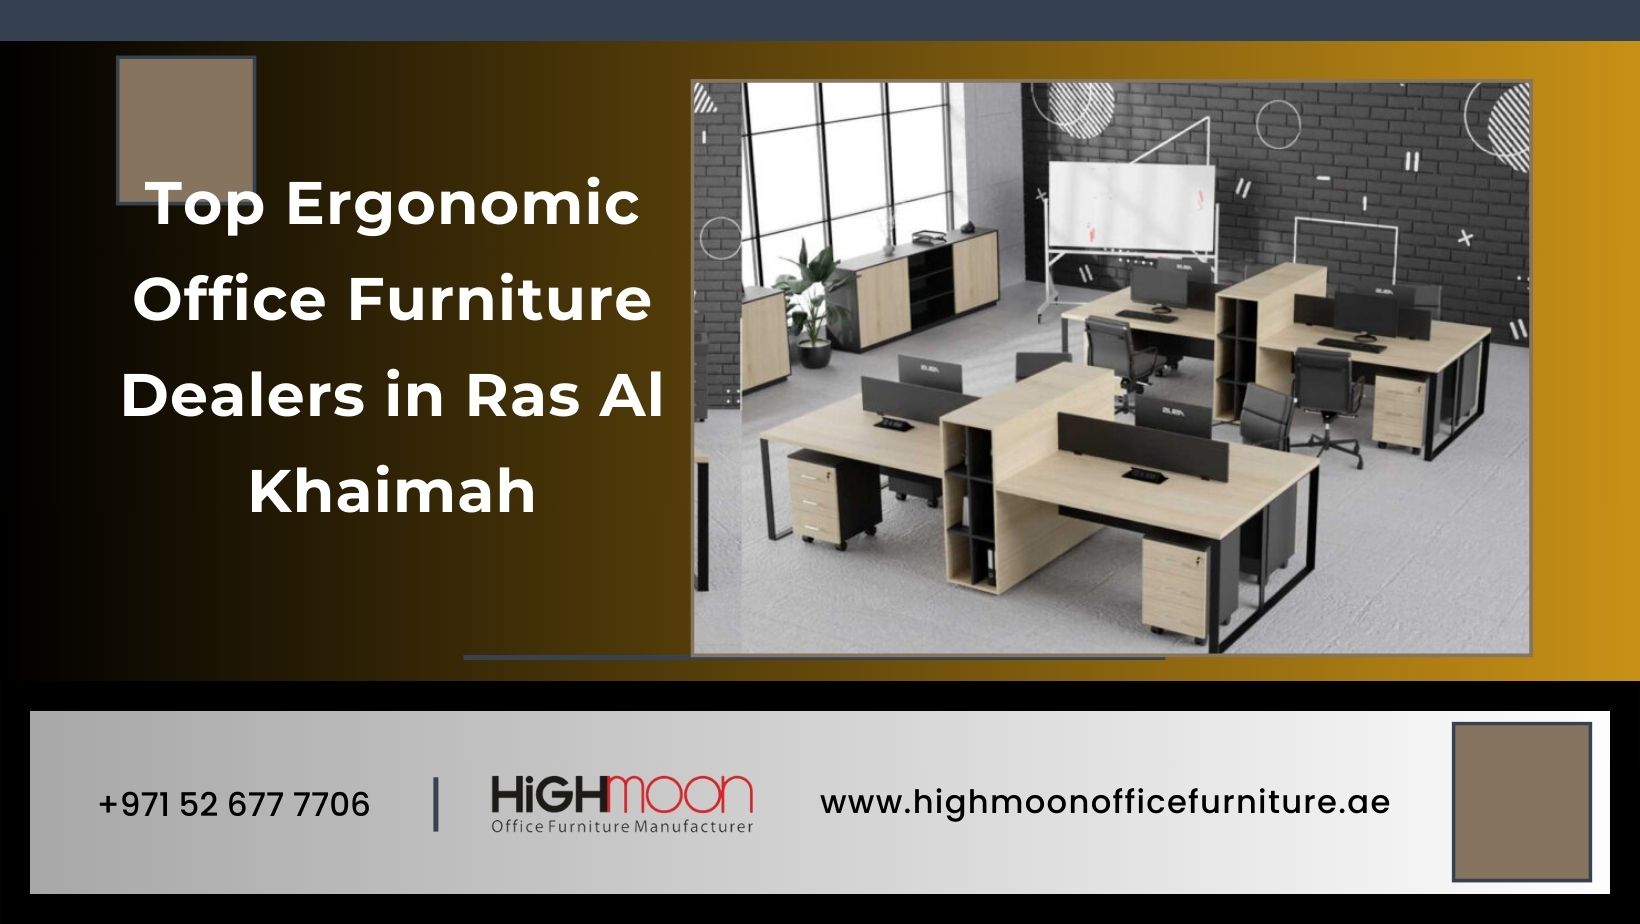 Top Ergonomic Office Furniture Dealers in Ras Al Khaimah